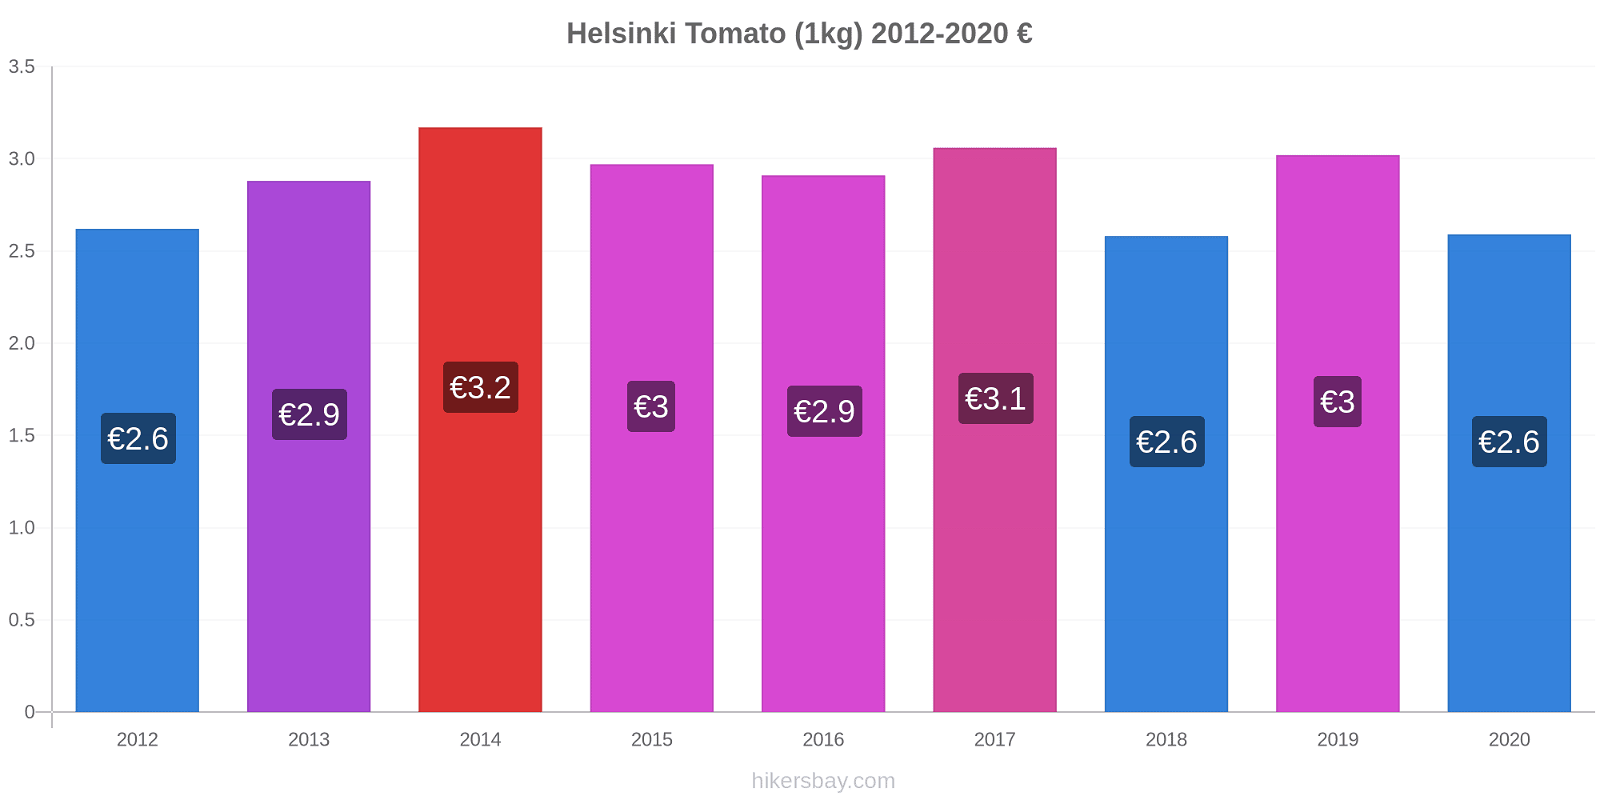 Helsinki price changes Tomato (1kg) hikersbay.com